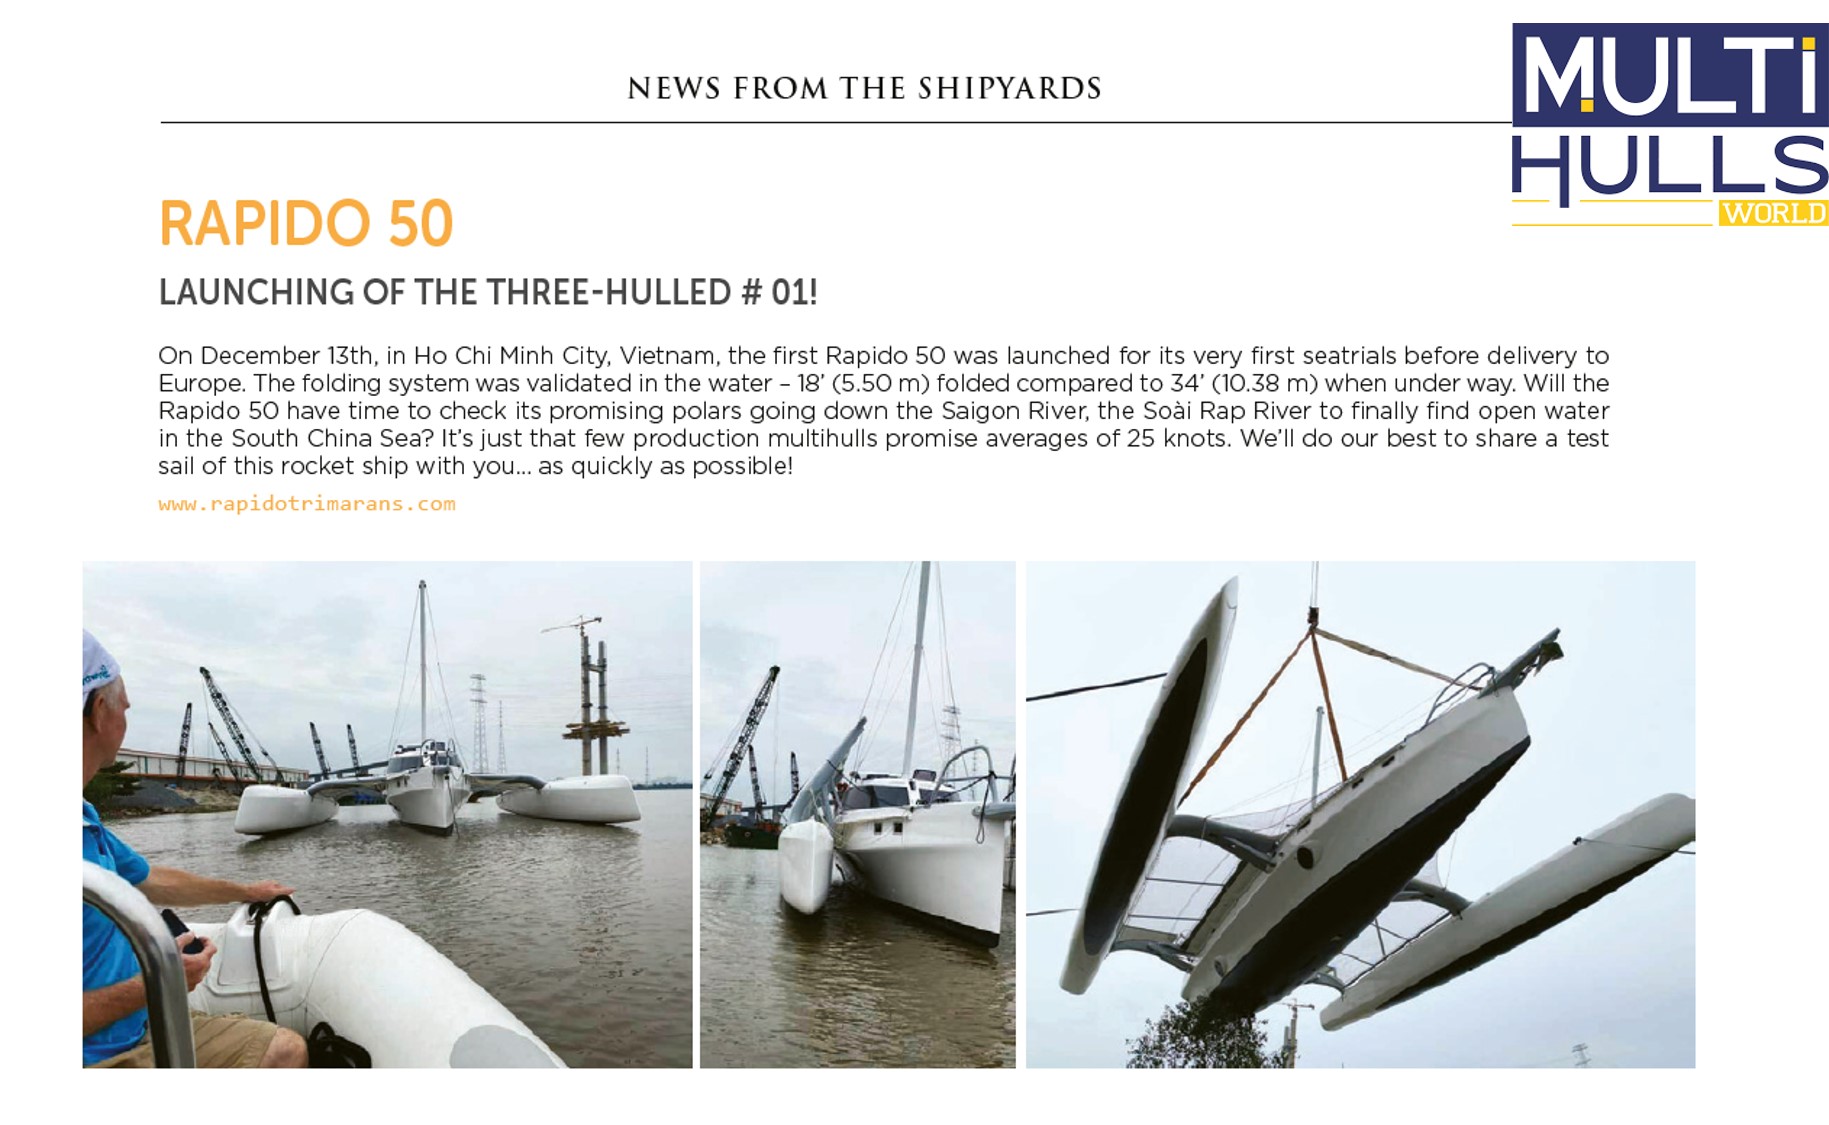 Multihulls World: Rapido 50 News from the Shipyards